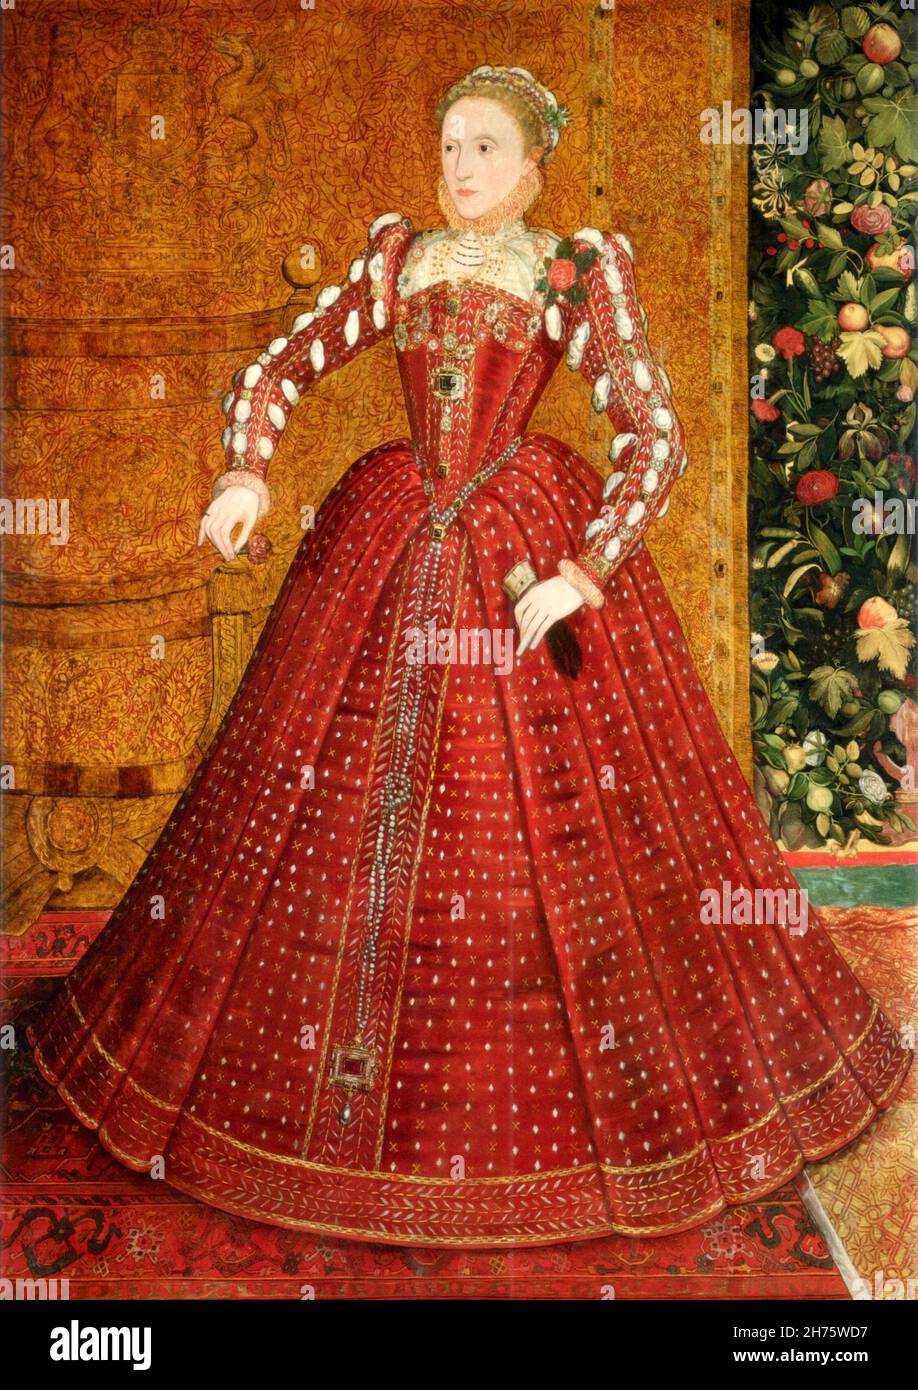 George Gower retrato de la reina Elizabeth El primero de Inglaterra le atribuyó a Steven van der Meulen - 1567 Foto de stock